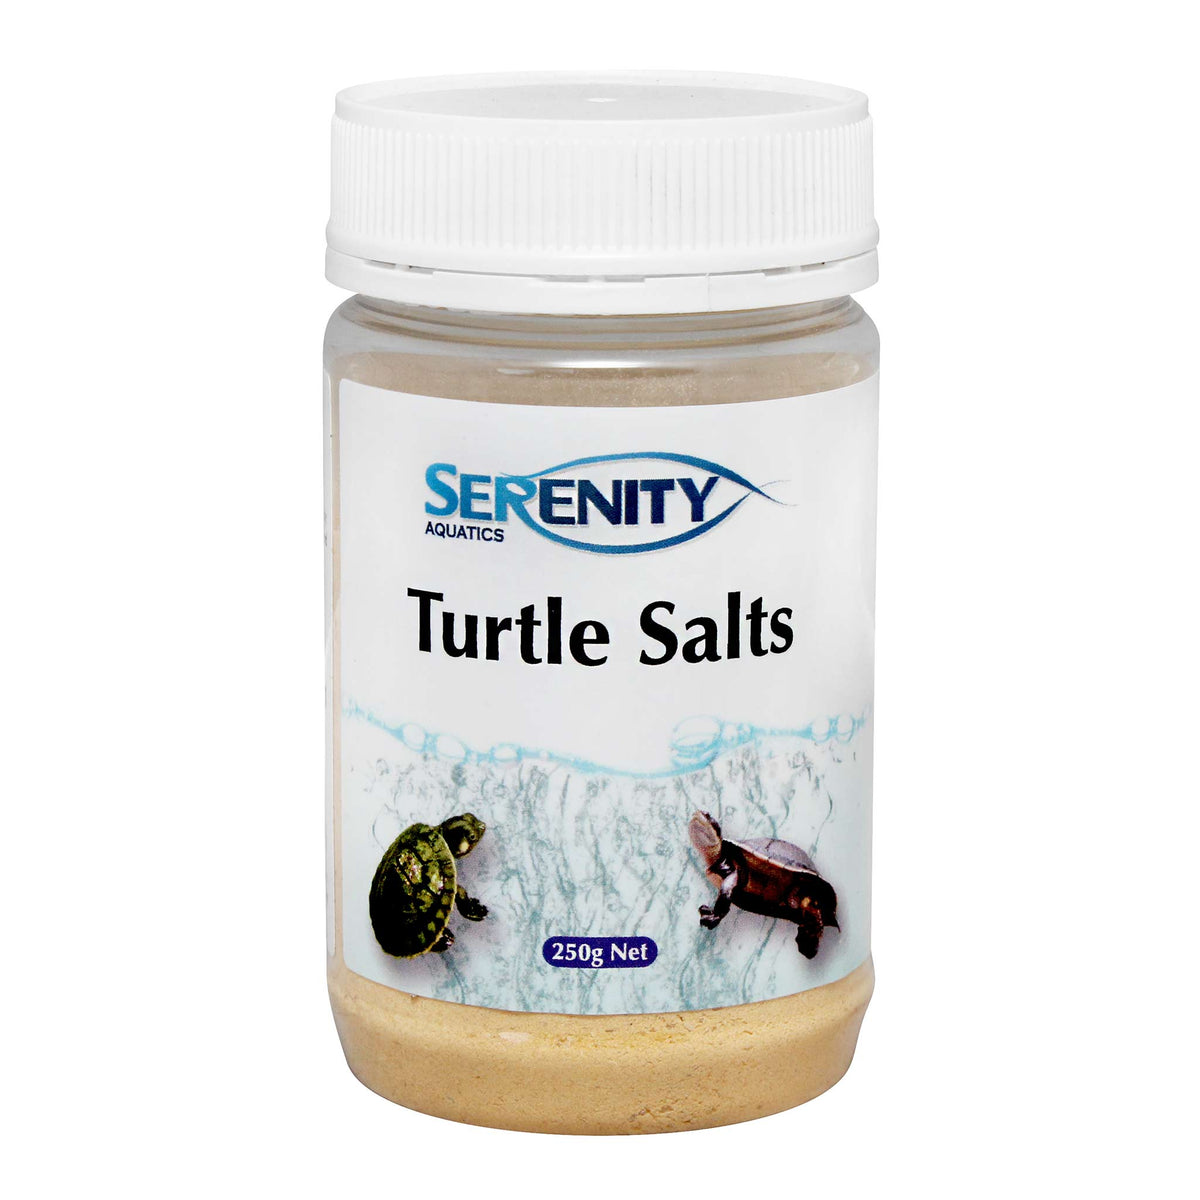 Serenity Turtle Salts 250g